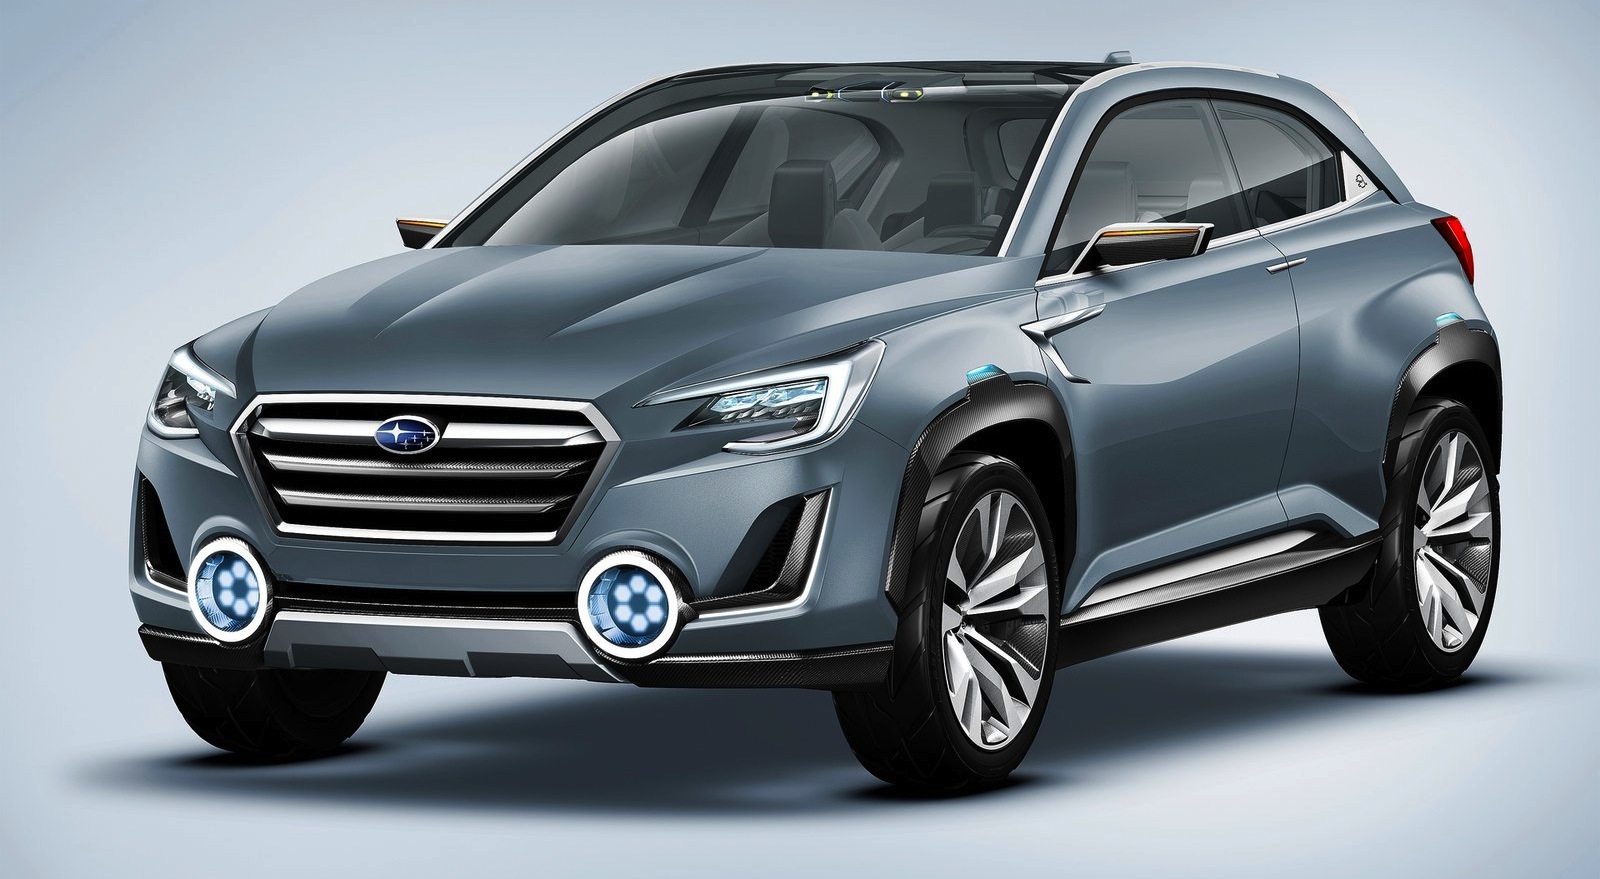 Subaru 2020 strategy focuses on improved vehicle quality, new SUVs